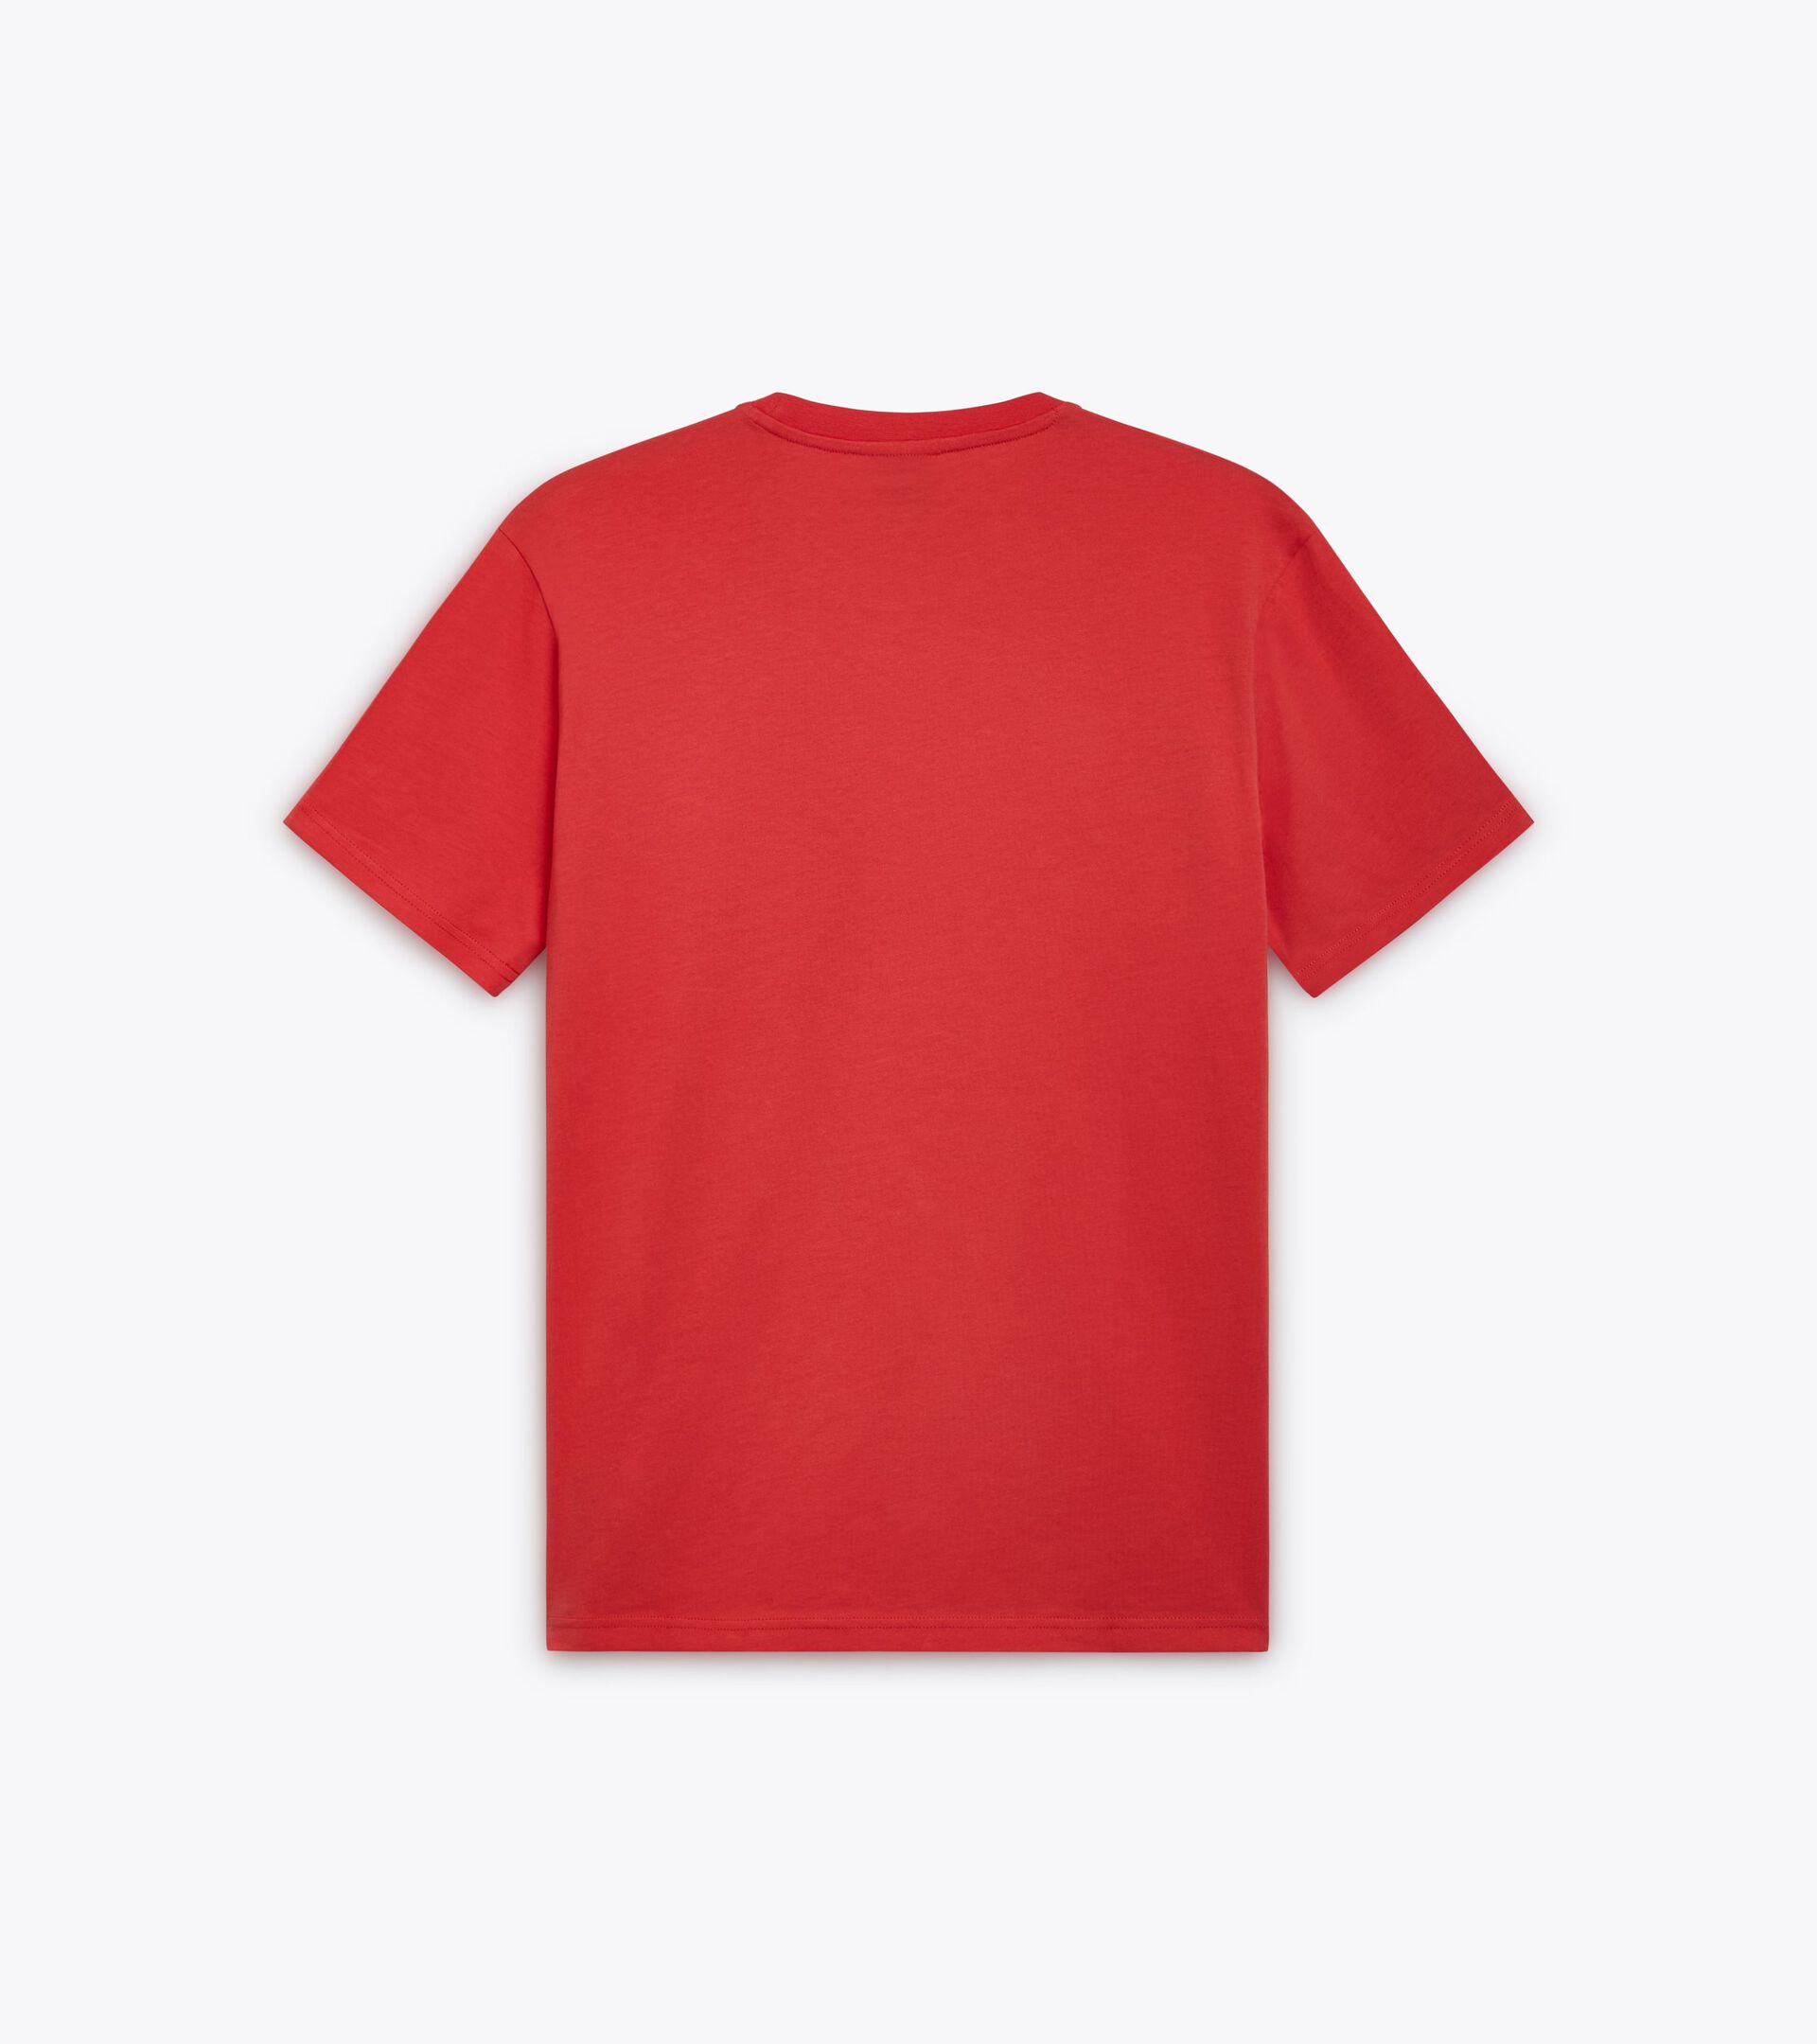 Camiseta deportiva - Hombre T-SHIRT SS CORE ROJO CAYENA - Diadora